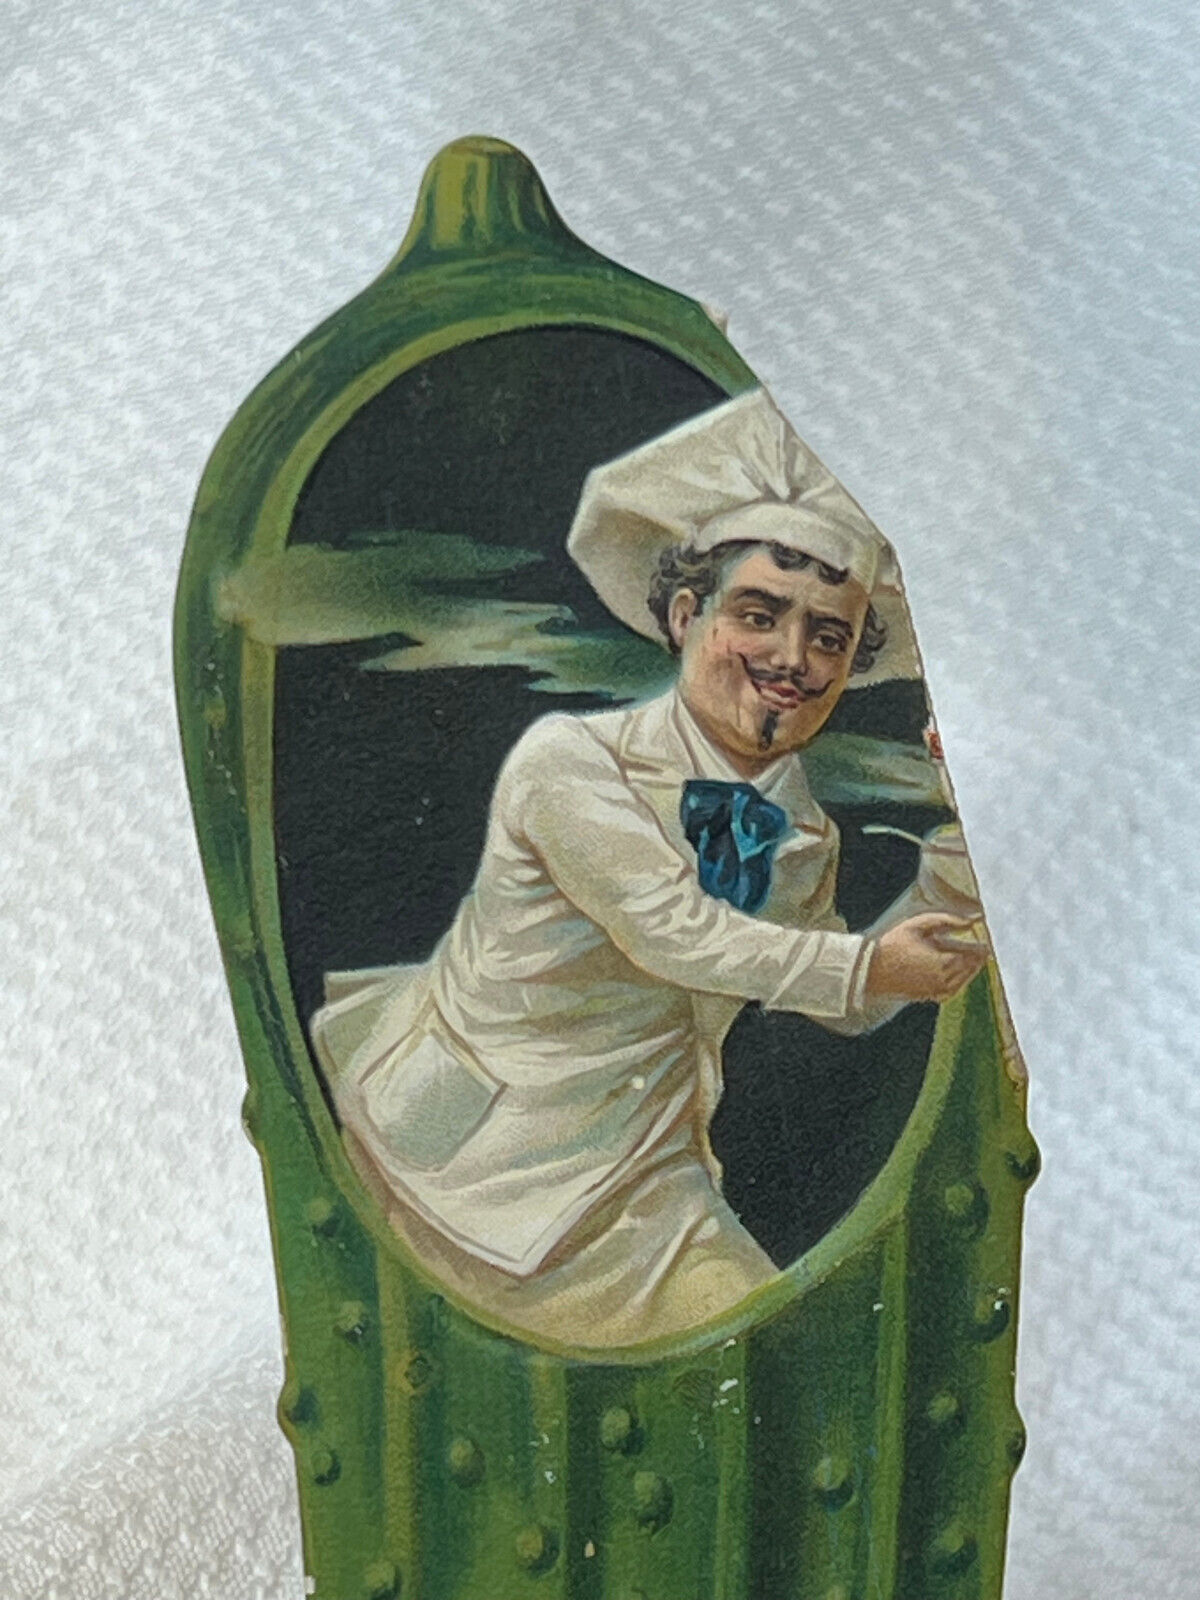 Heinz Die Cut Pickle European Branch House Antique 1800s Victorian Trade Card - $39.55